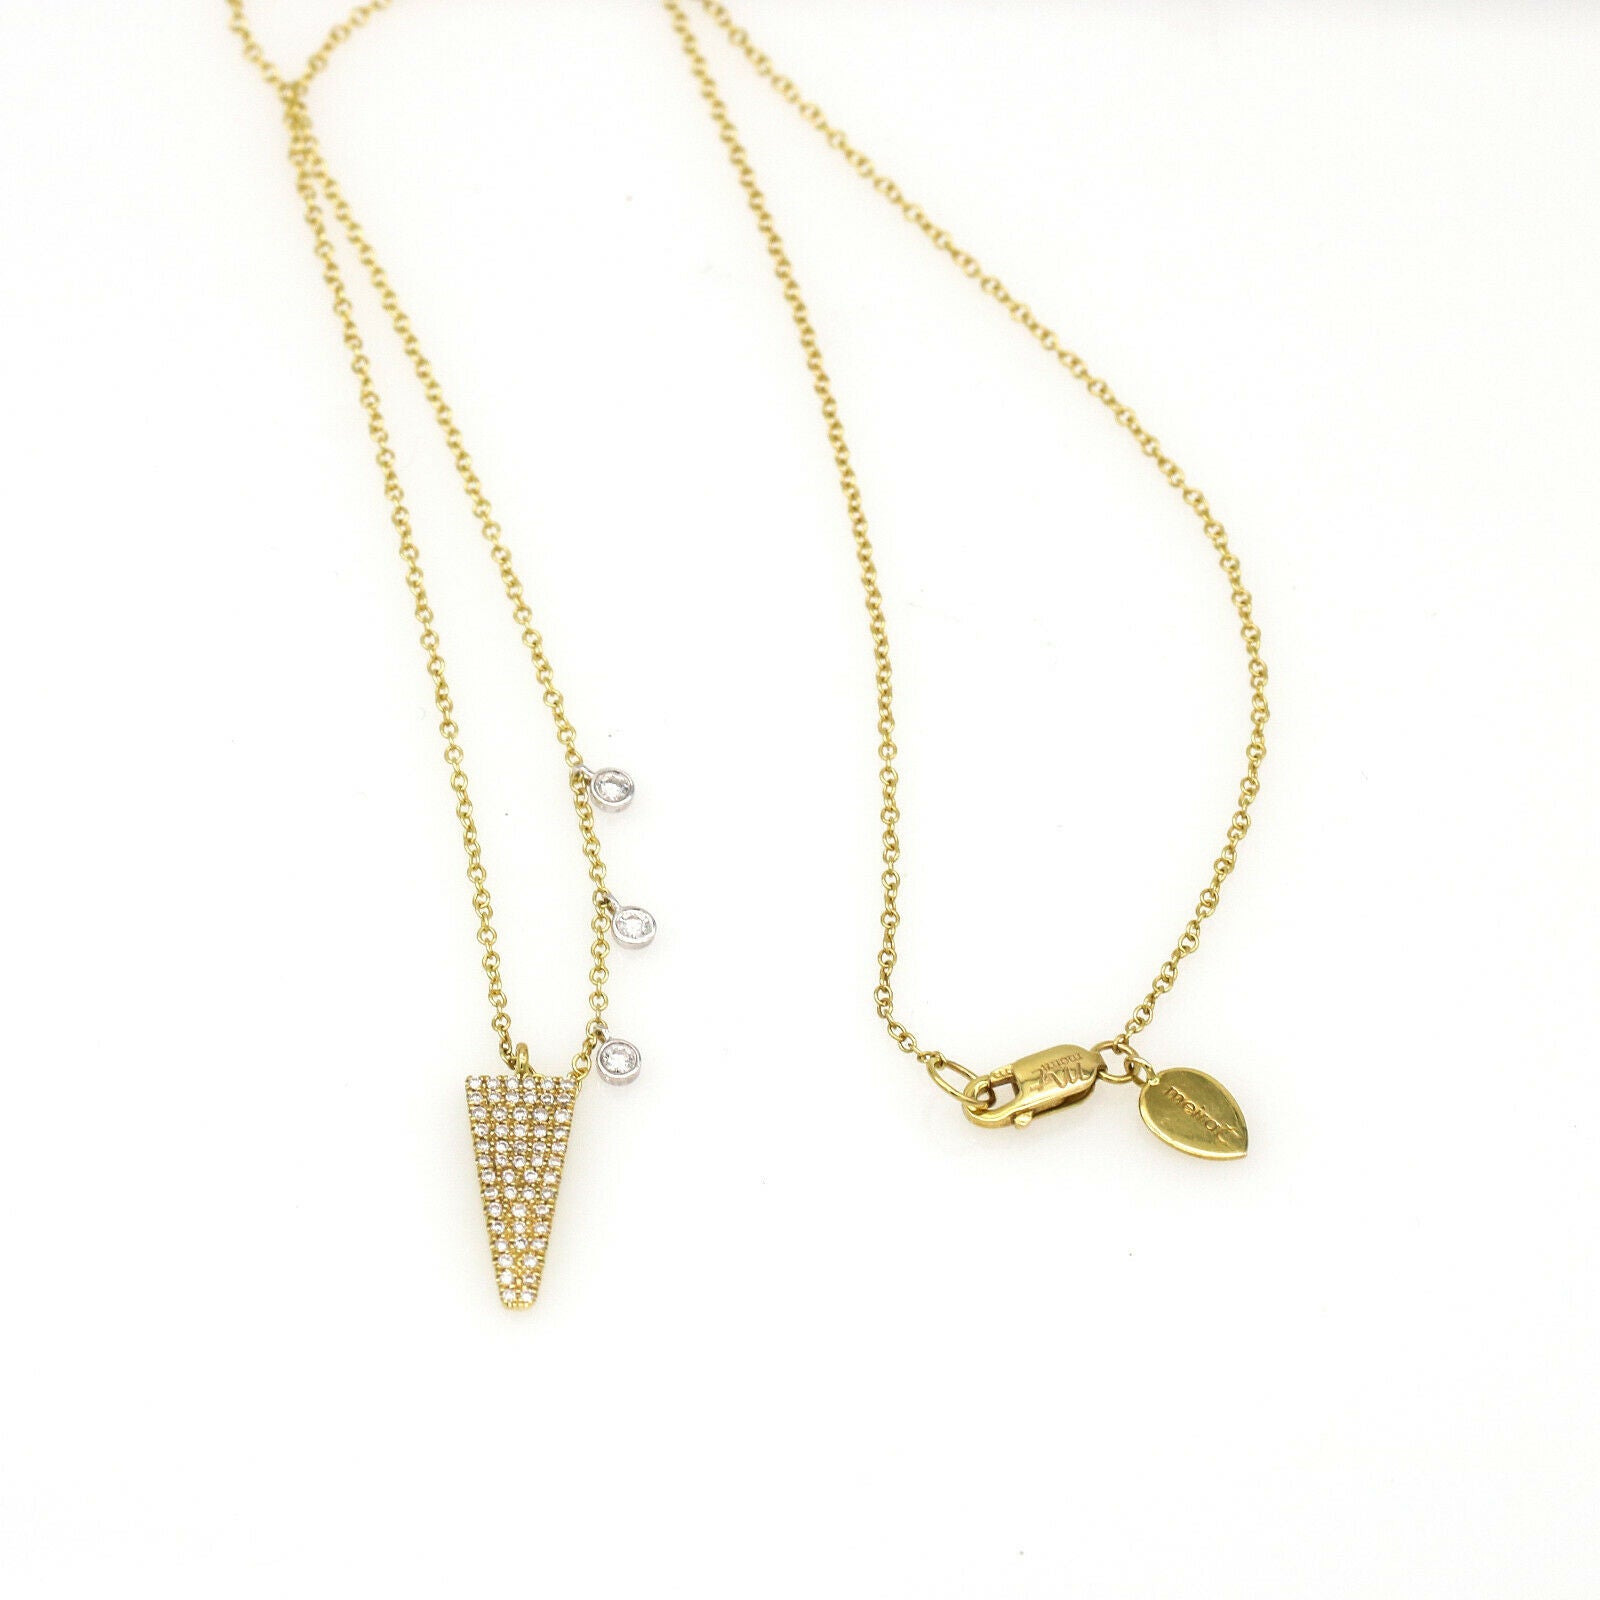 Meira T Diamond Dagger Pendant Necklace in 14k Yellow Gold